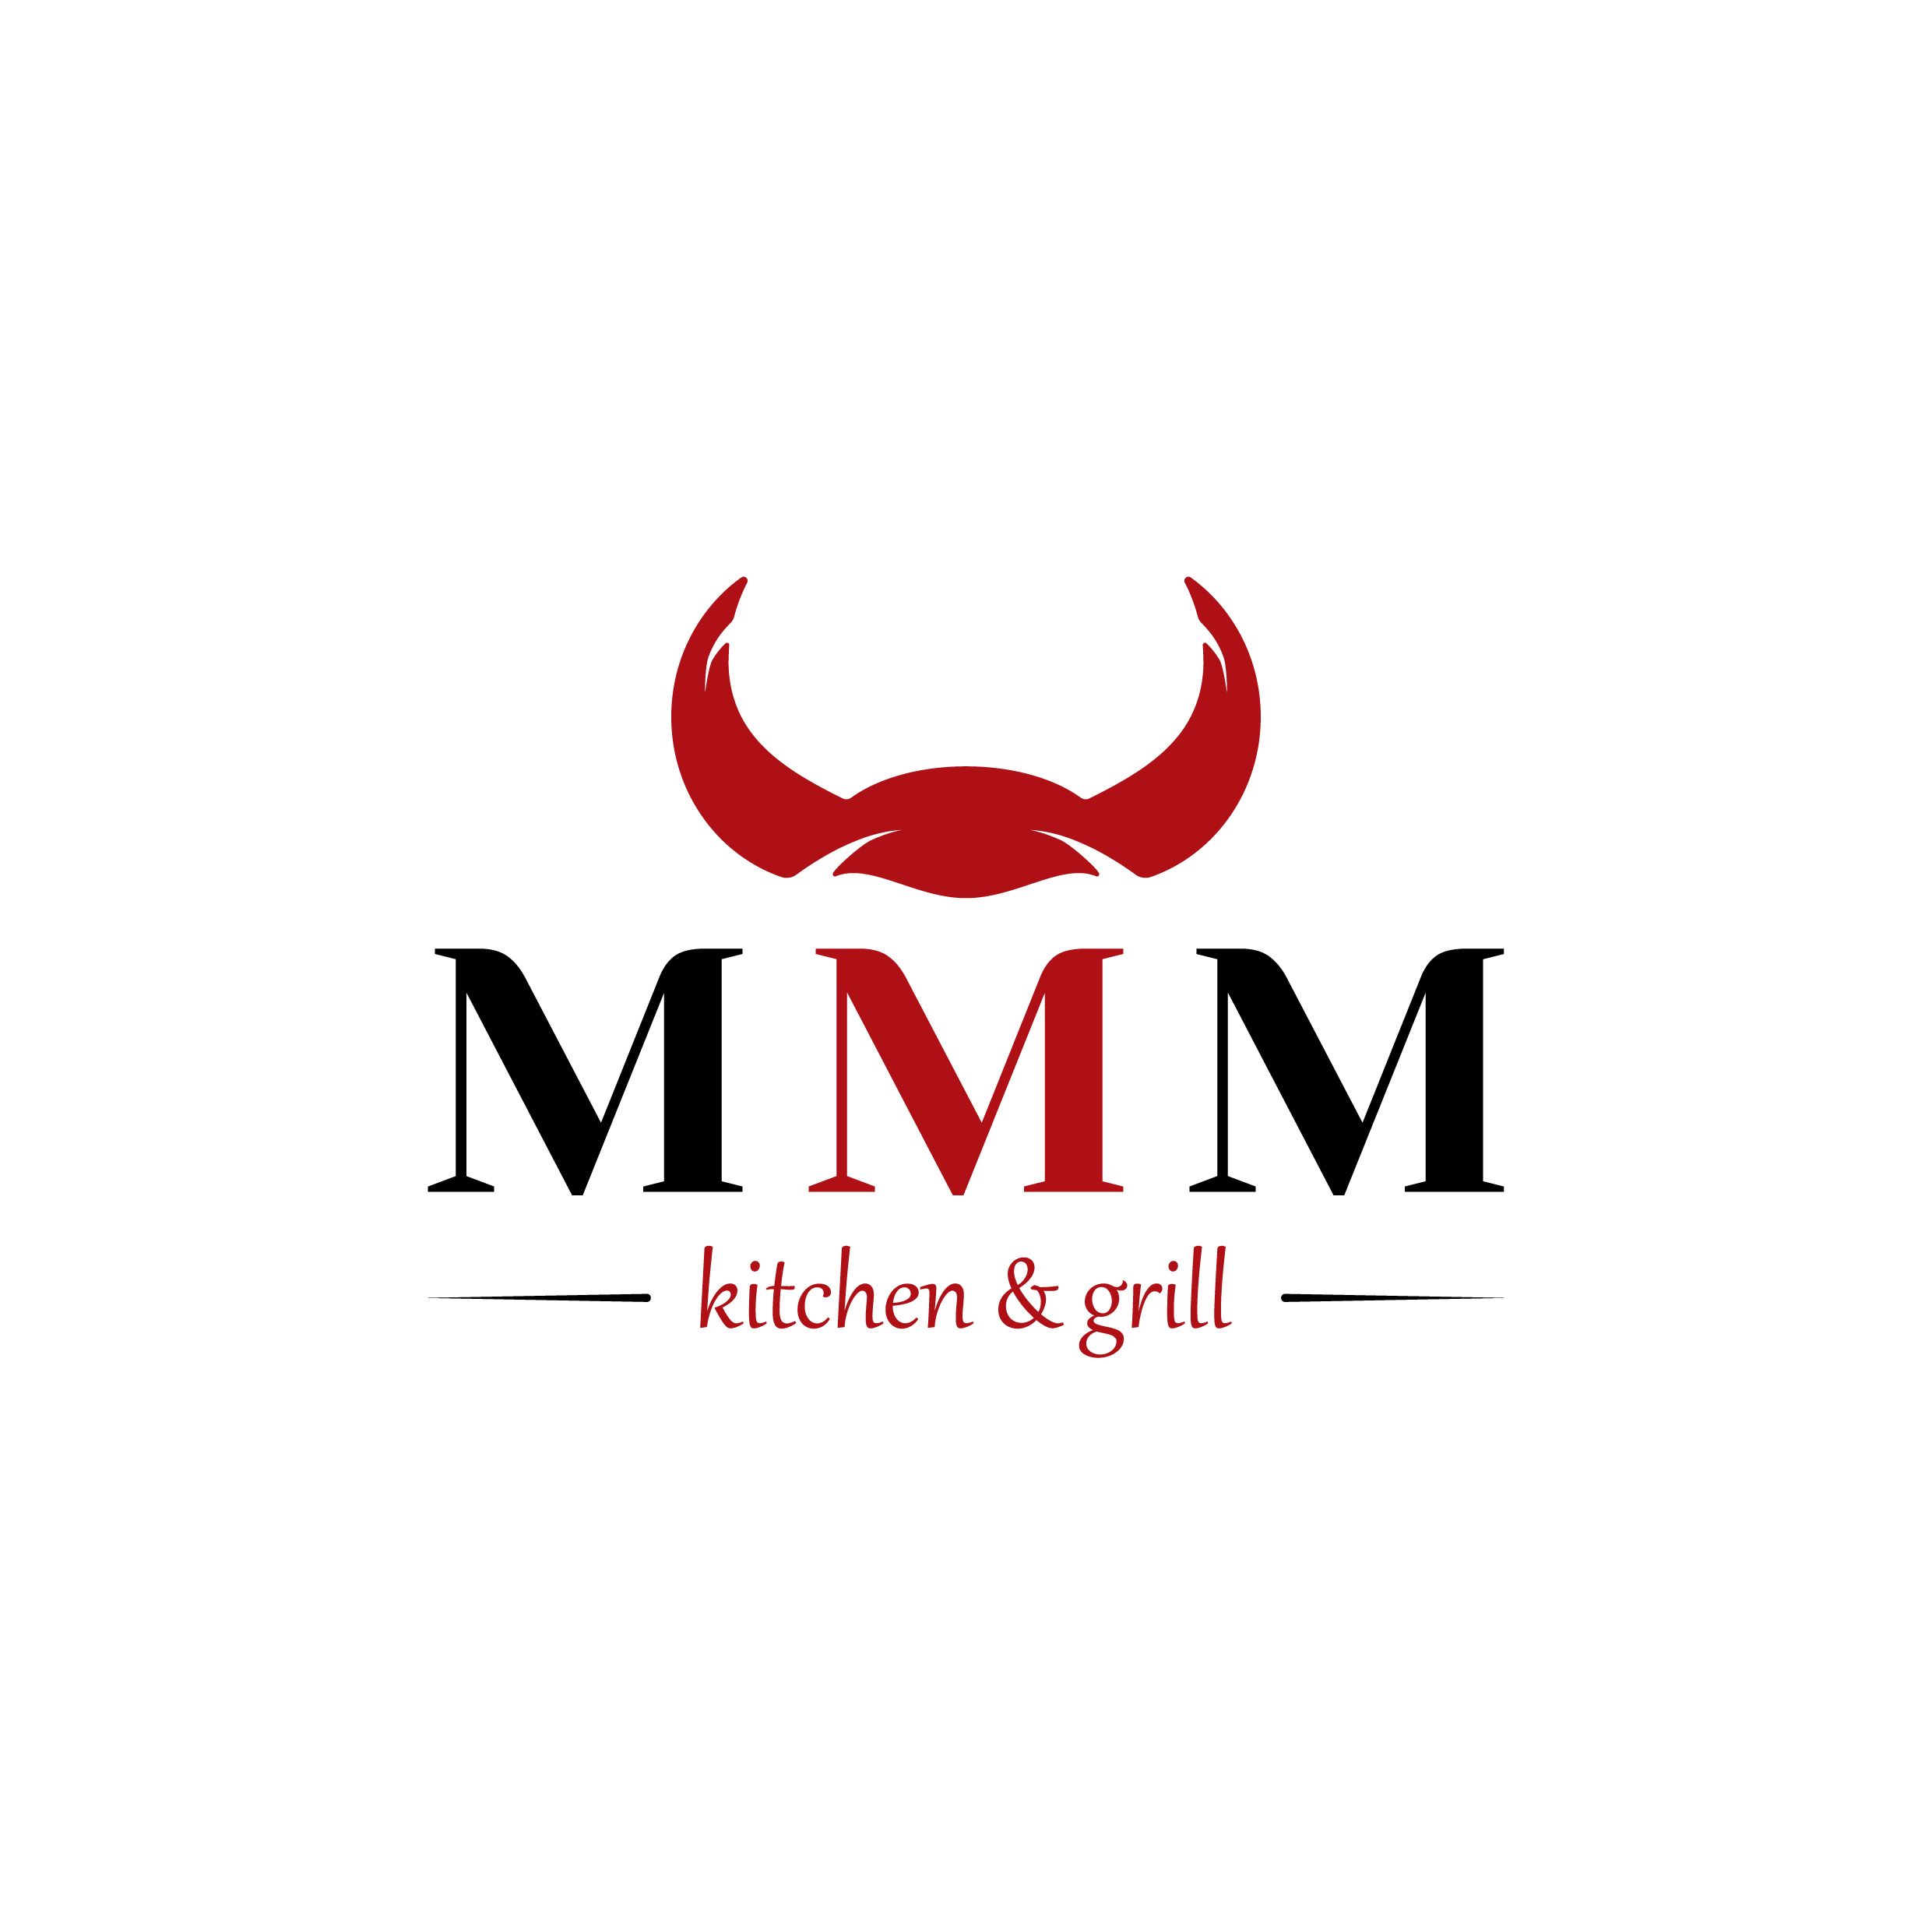 mmm - logo.jpg